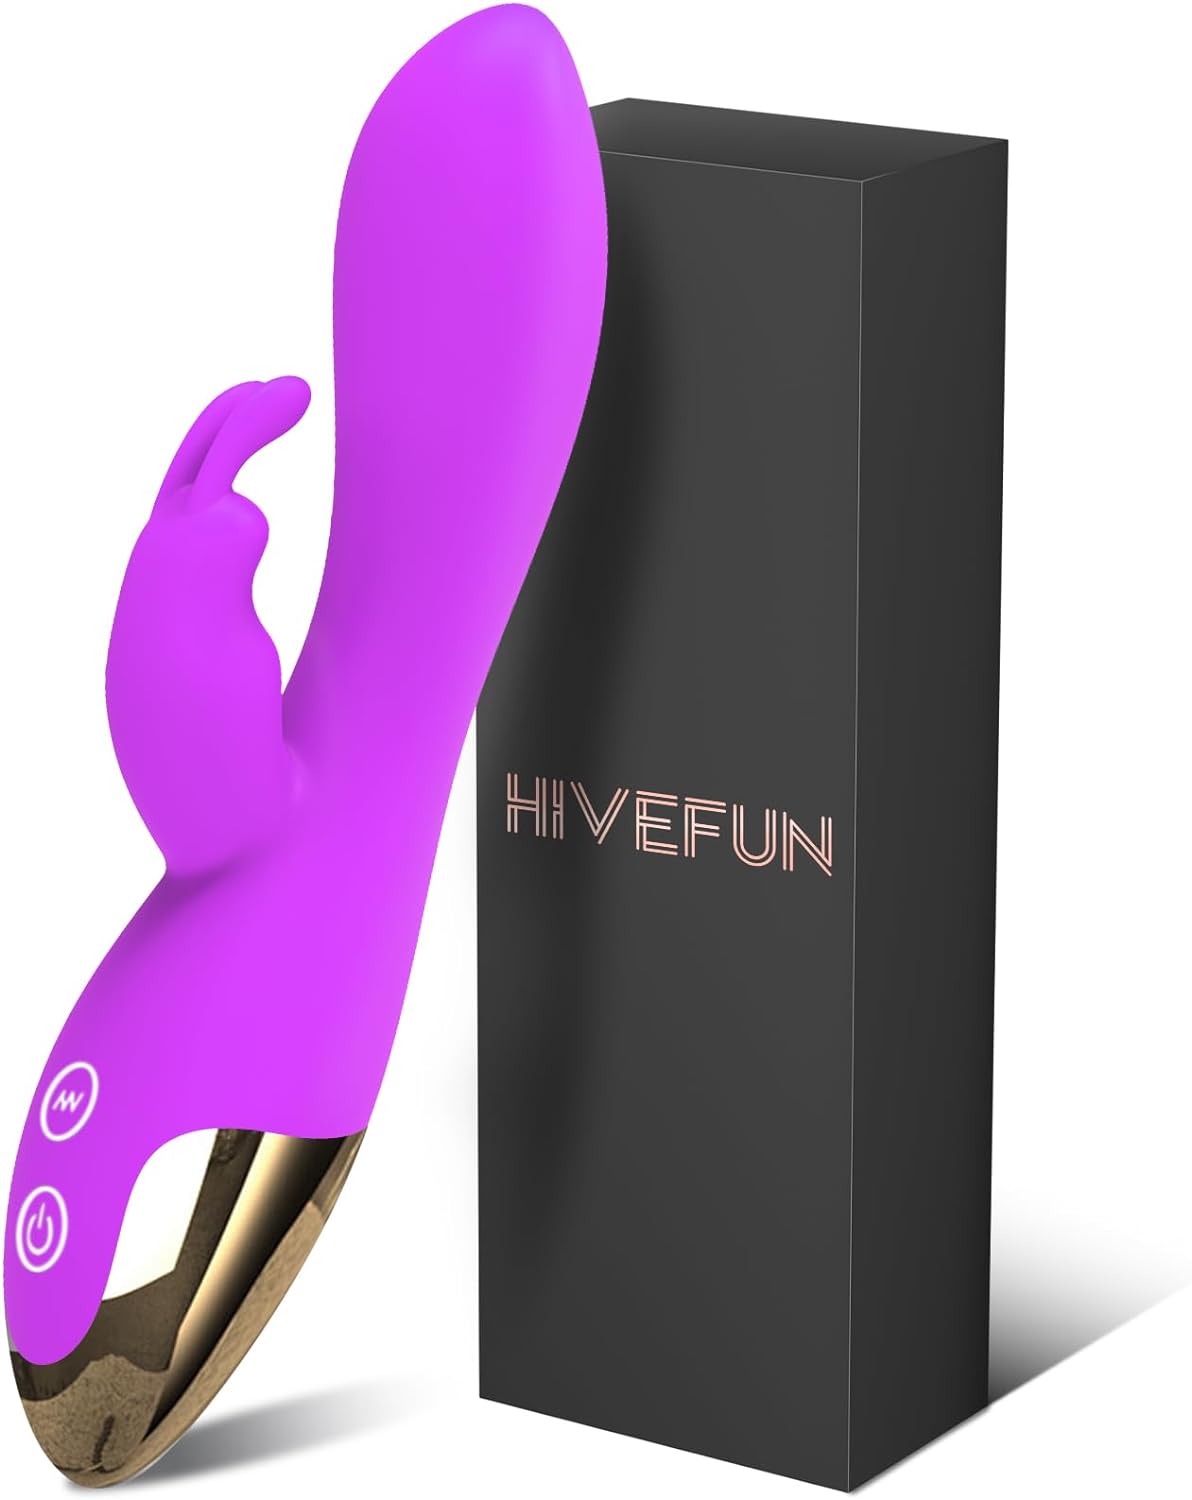 Vibrador conejo de marca hivefun de color morado con doble estimulación. Vibrador femenino.